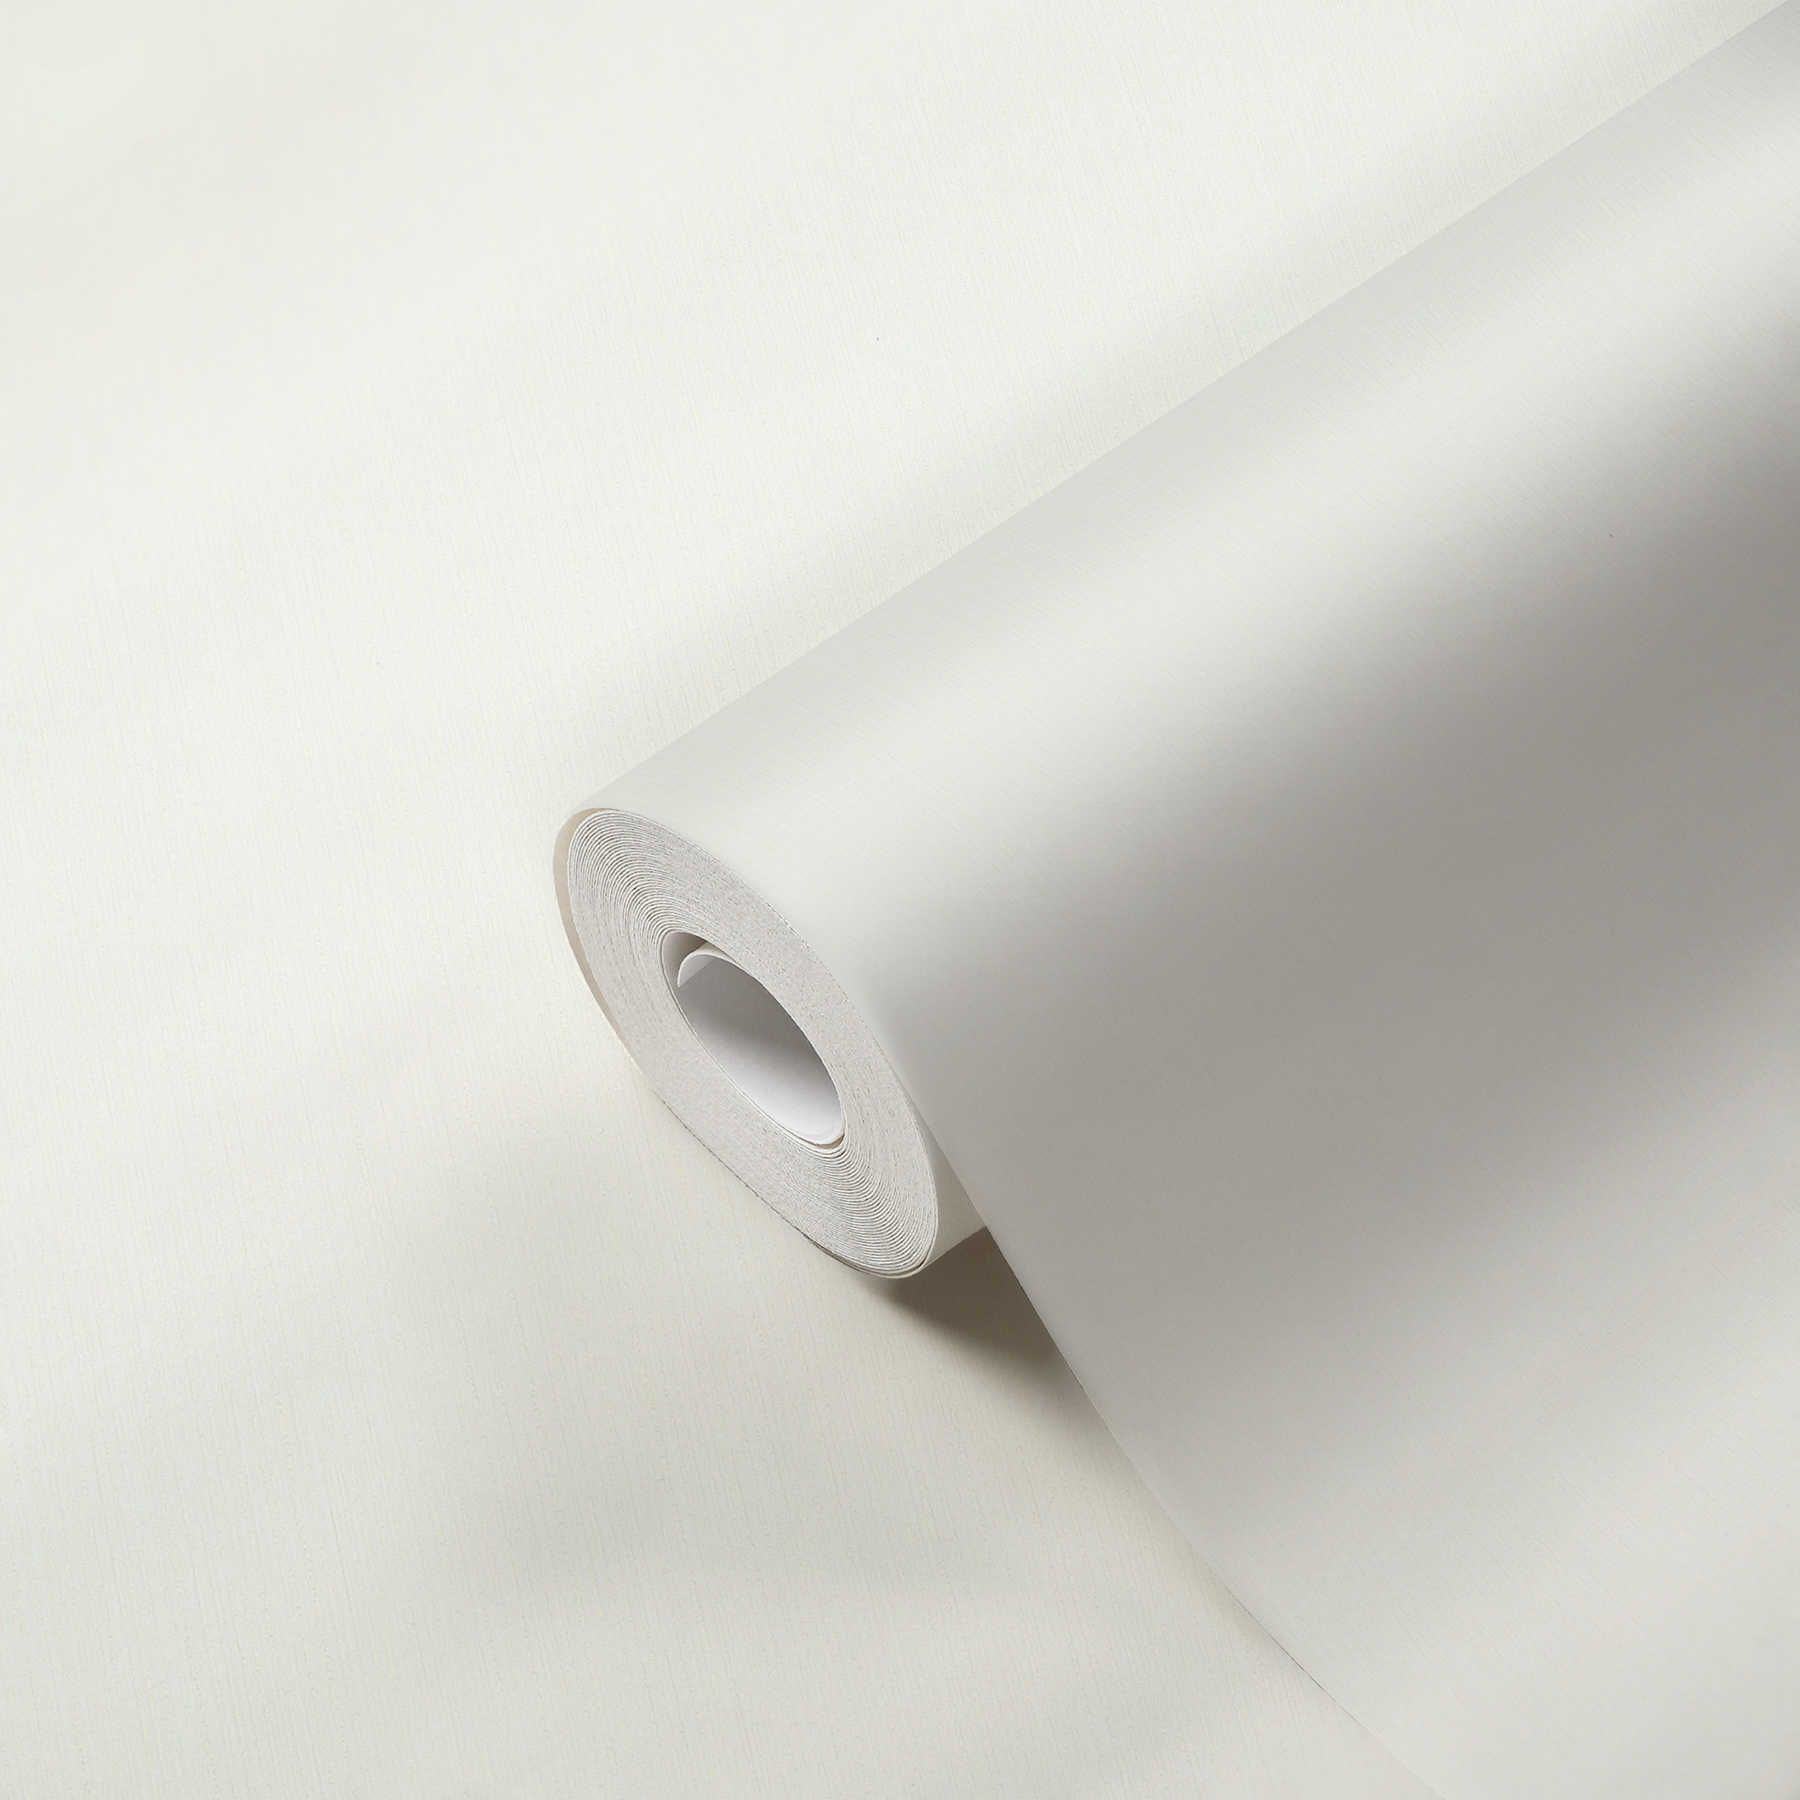             Wallpaper plain white, matte with texture surface
        